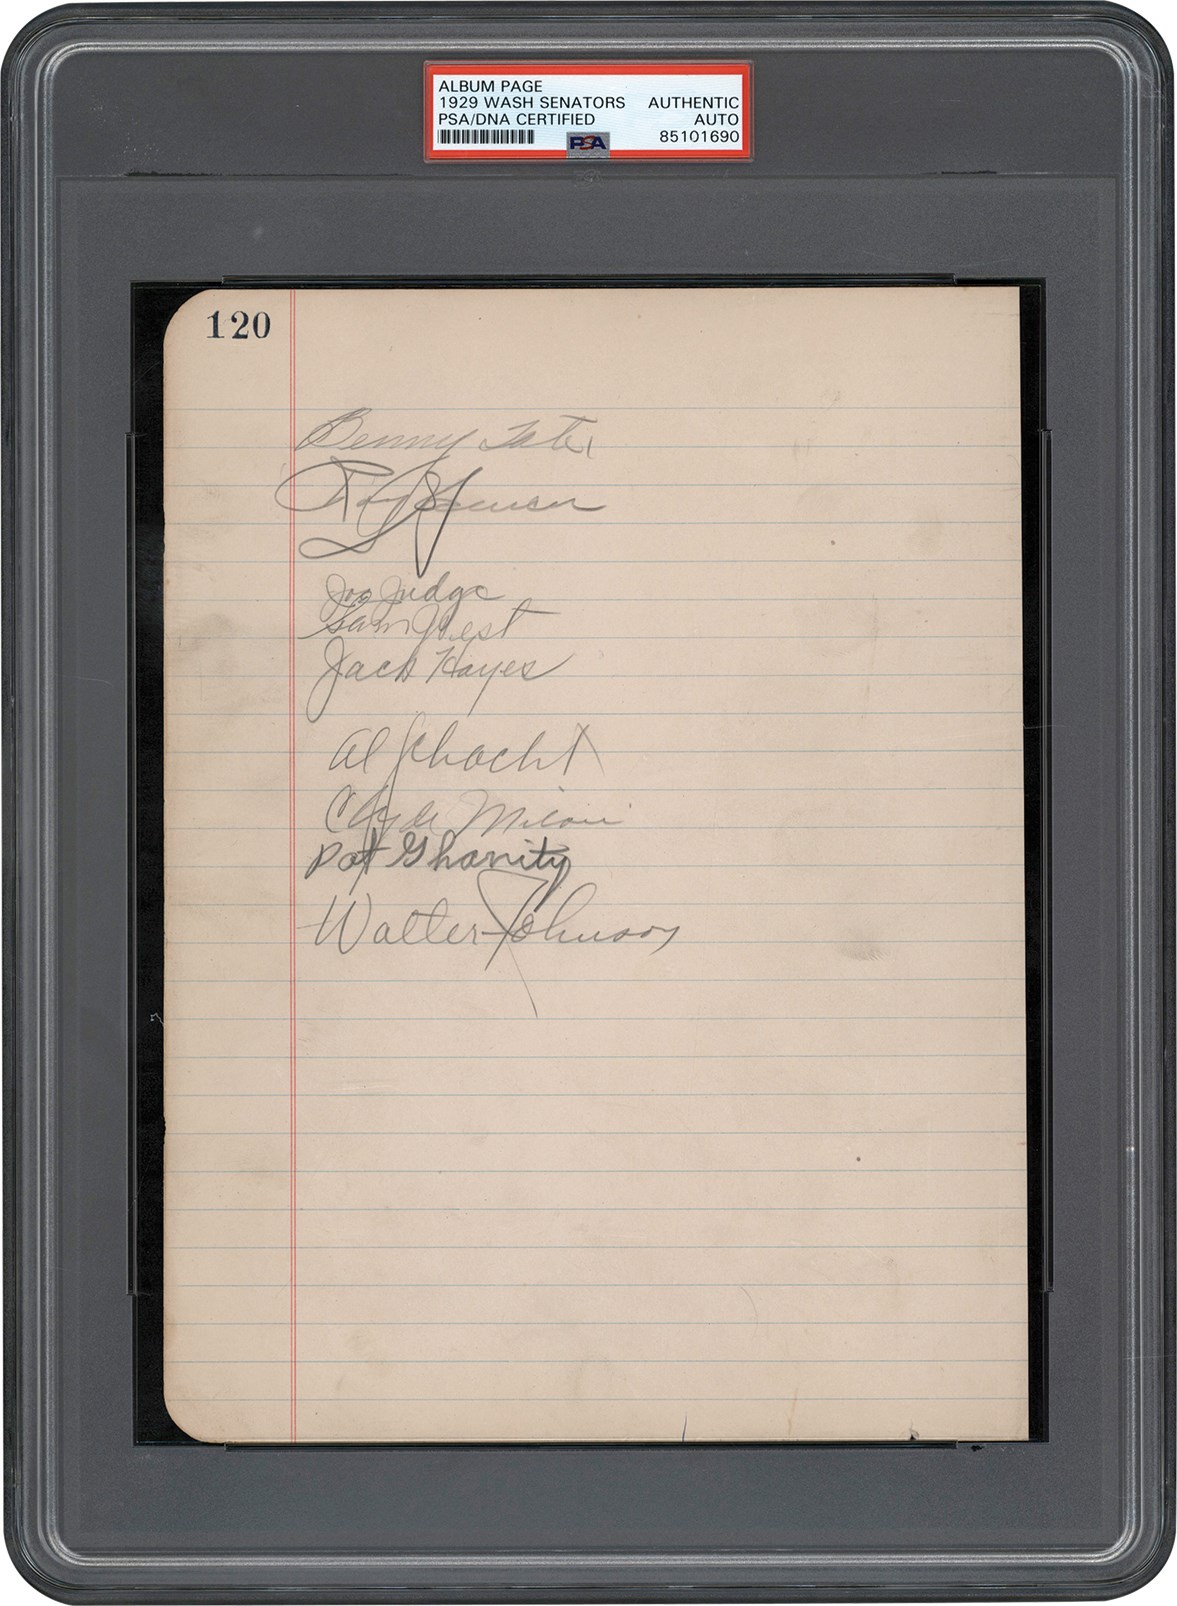 - 1929 Washington Senators Multi-Signed Album Page w/Walter Johnson (PSA)